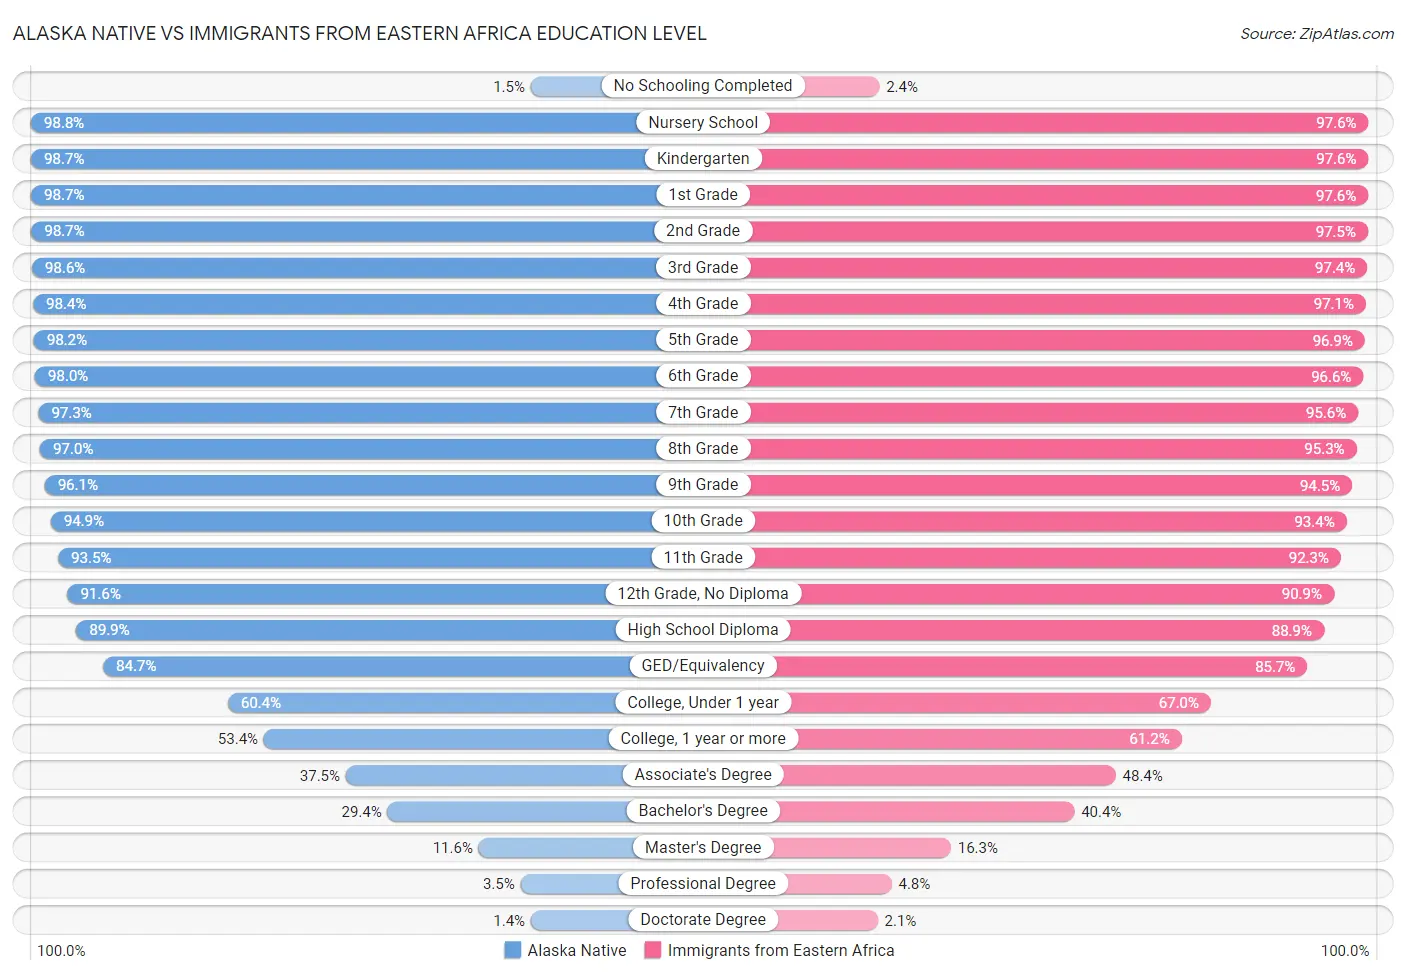 Alaska Native vs Immigrants from Eastern Africa Education Level